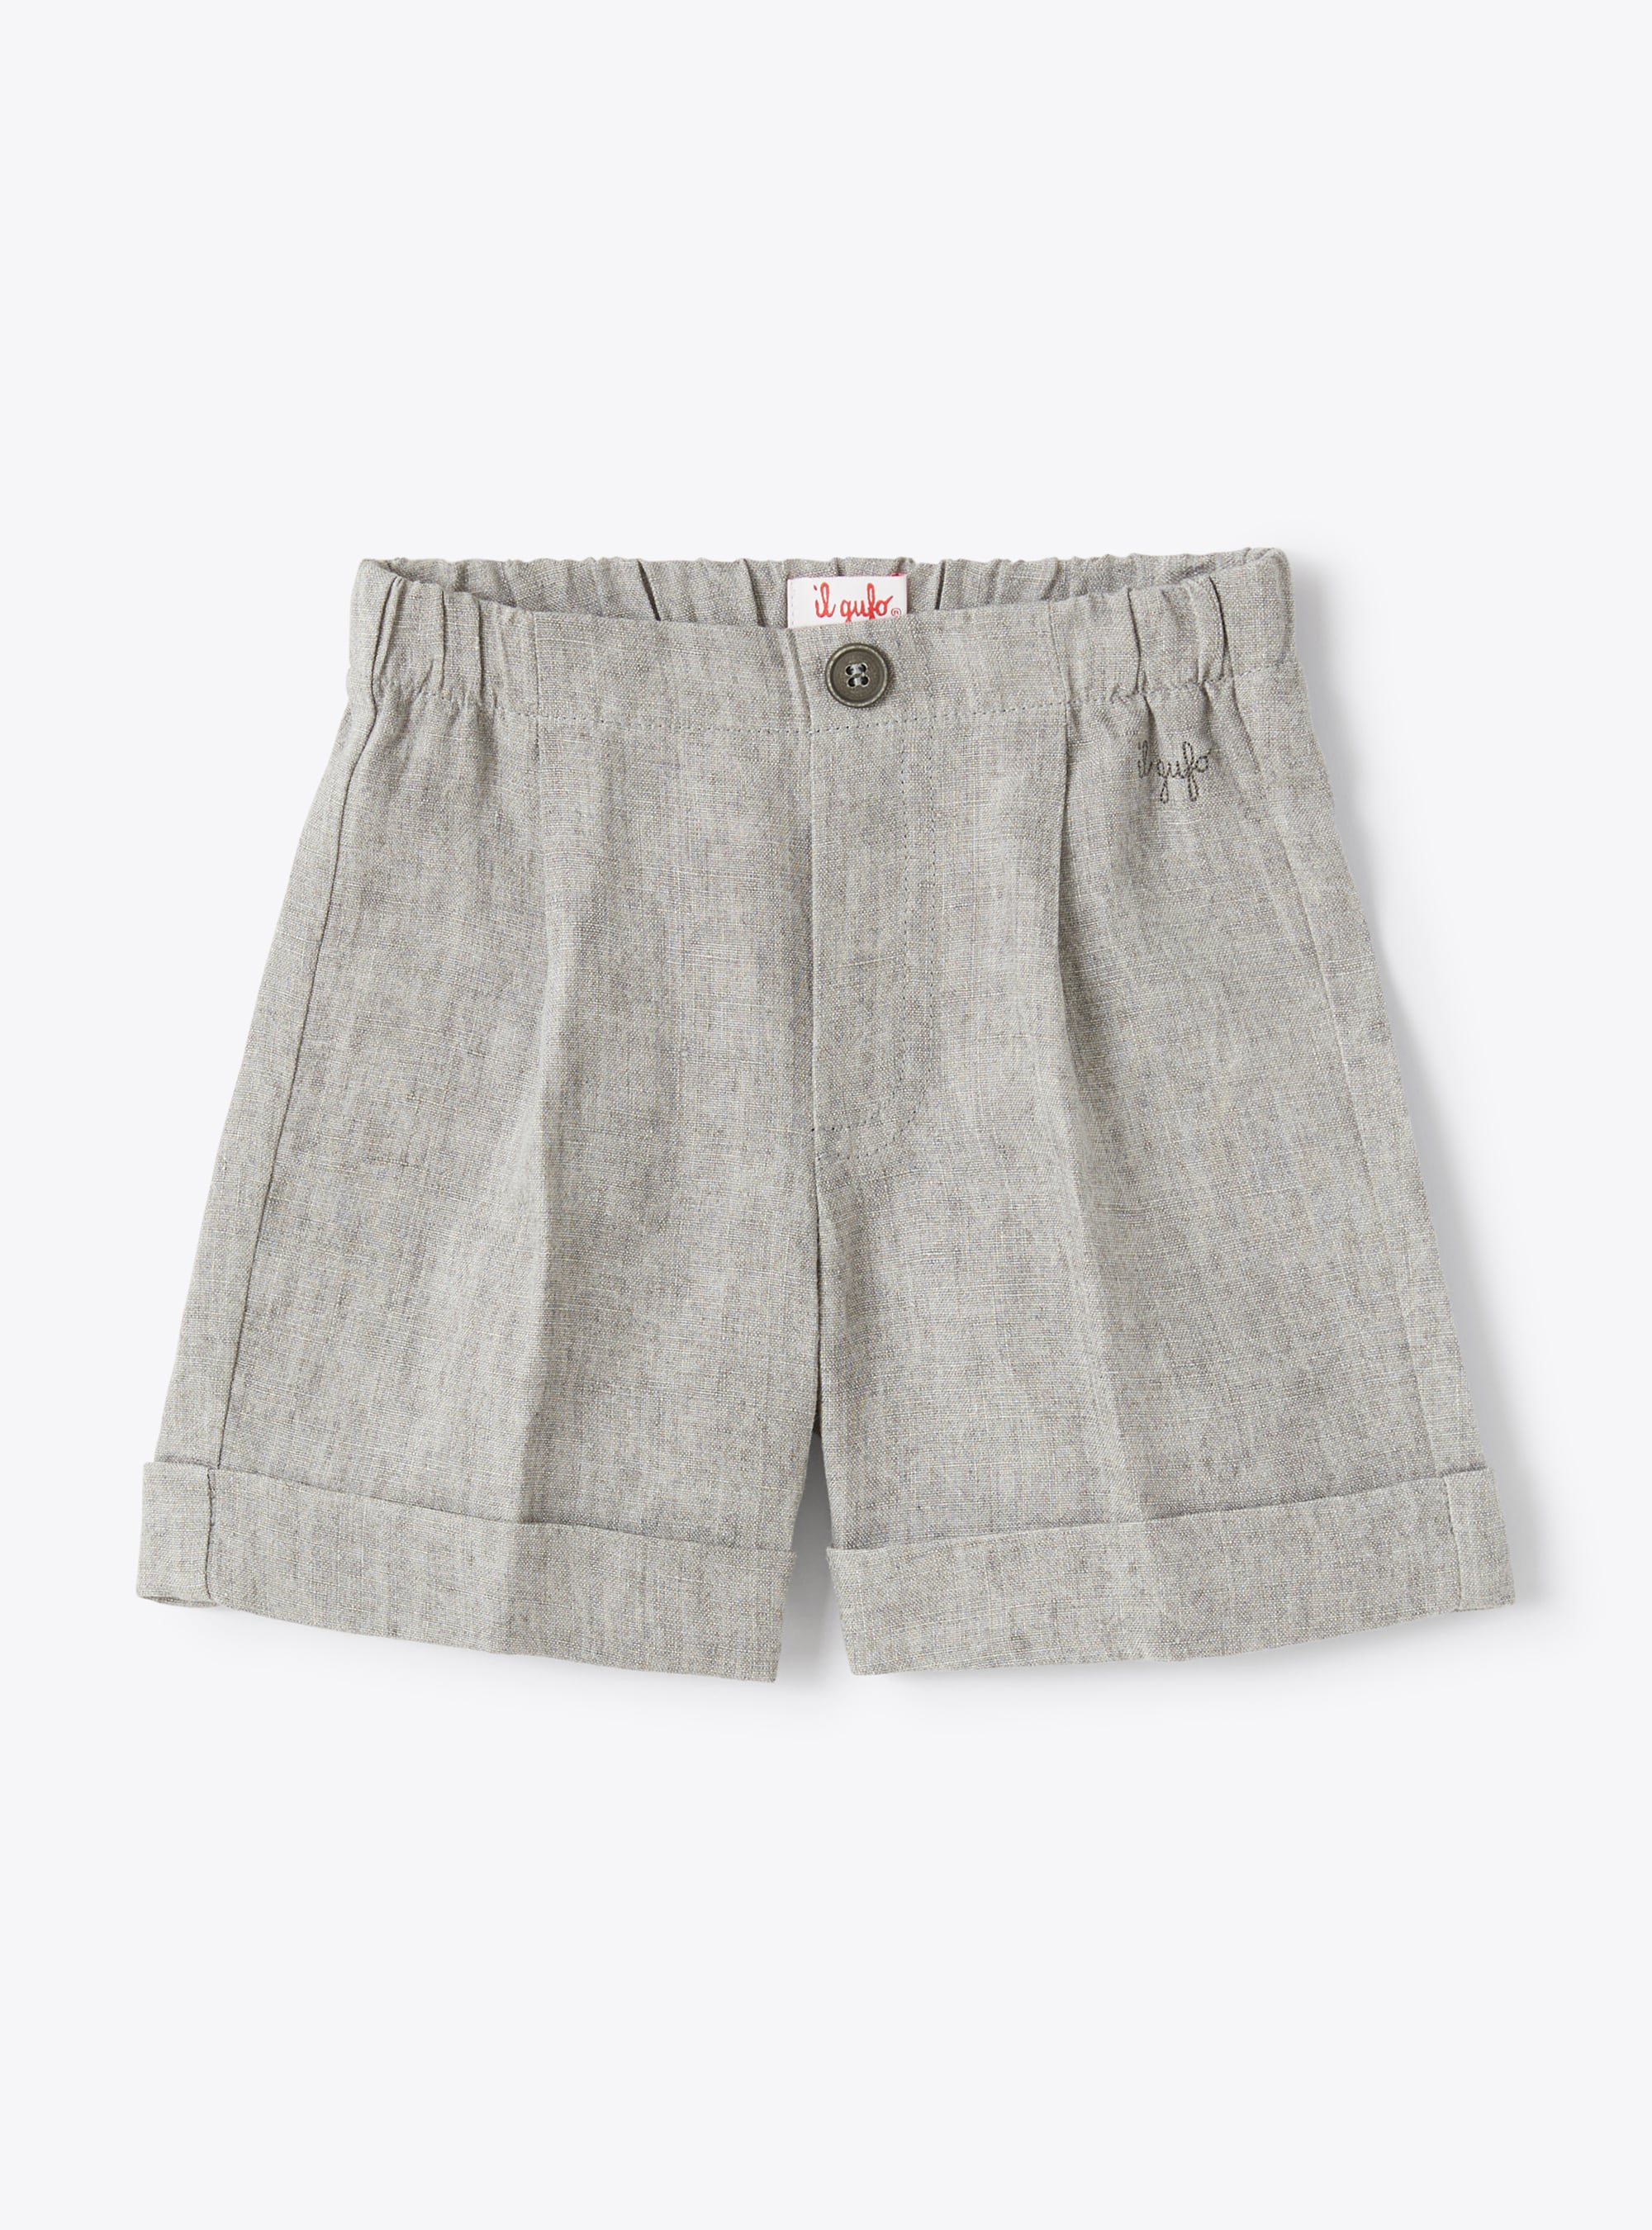 Bermuda shorts in muted-grey linen - Grey | Il Gufo